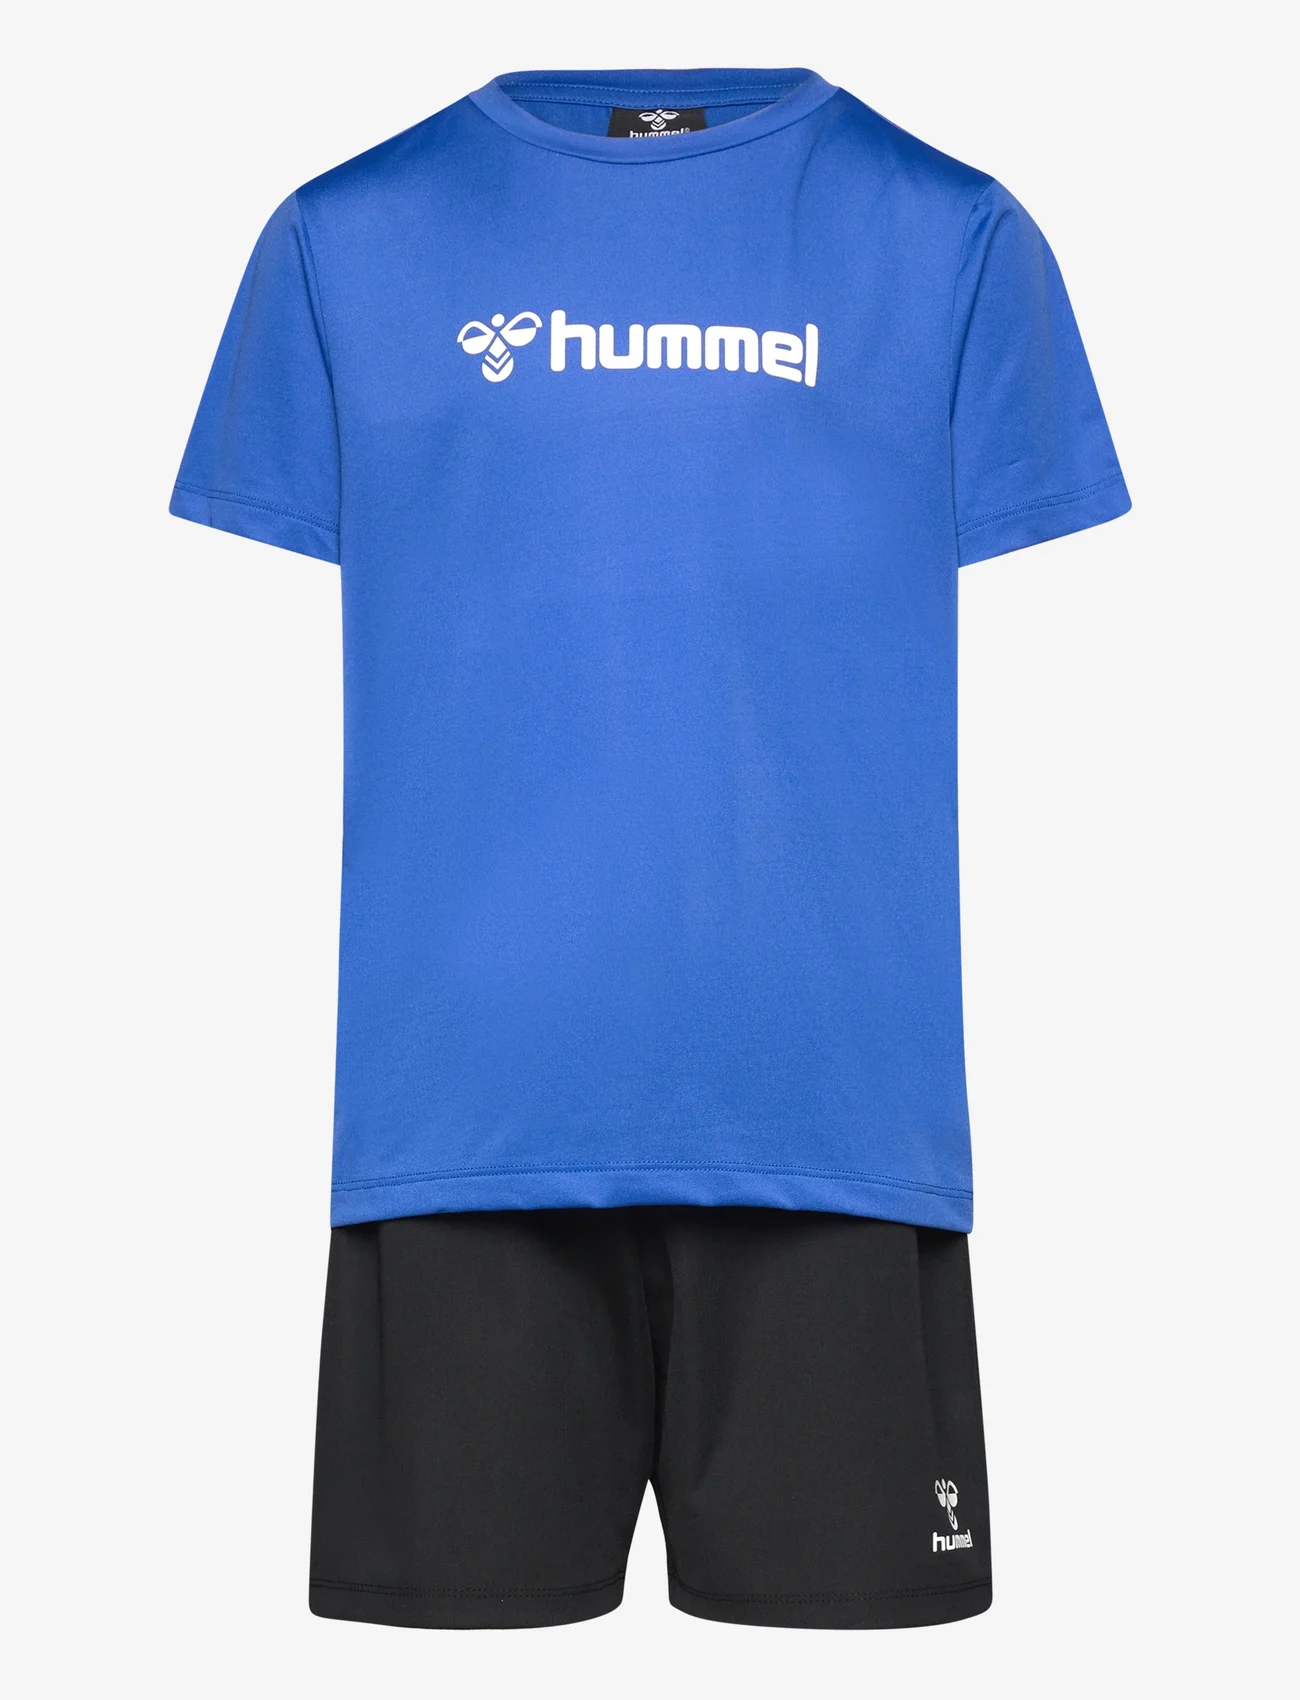 Hummel - hmlPLAG SHORTS SET - sets with short-sleeved t-shirt - nebulas blue - 0